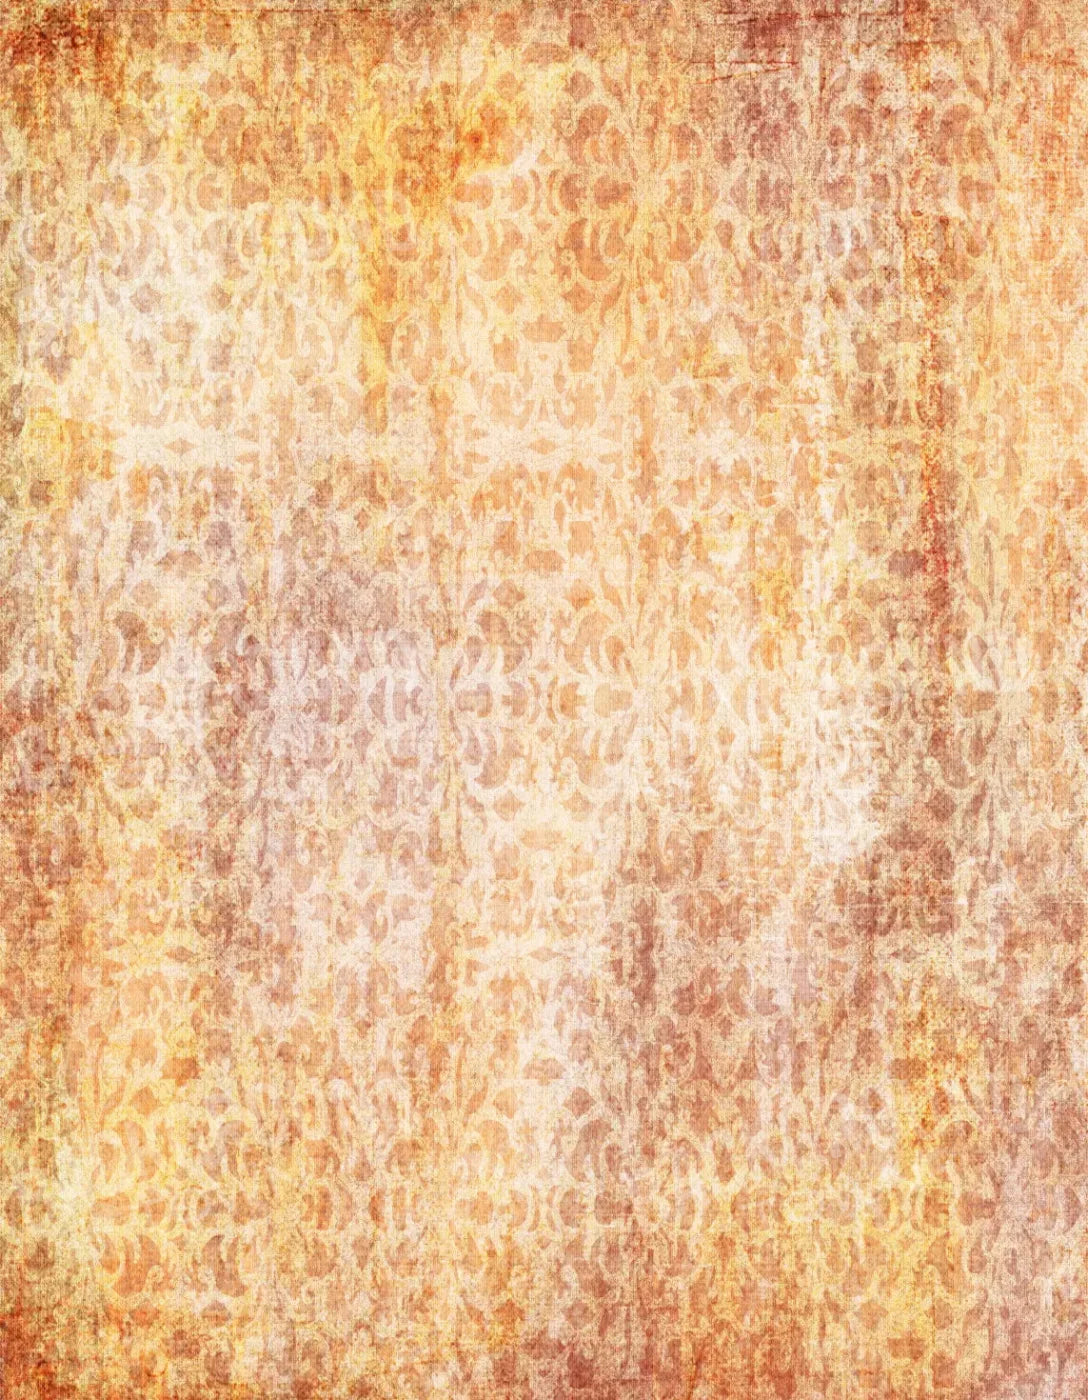 Apricot 6X8 Fleece ( 72 X 96 Inch ) Backdrop